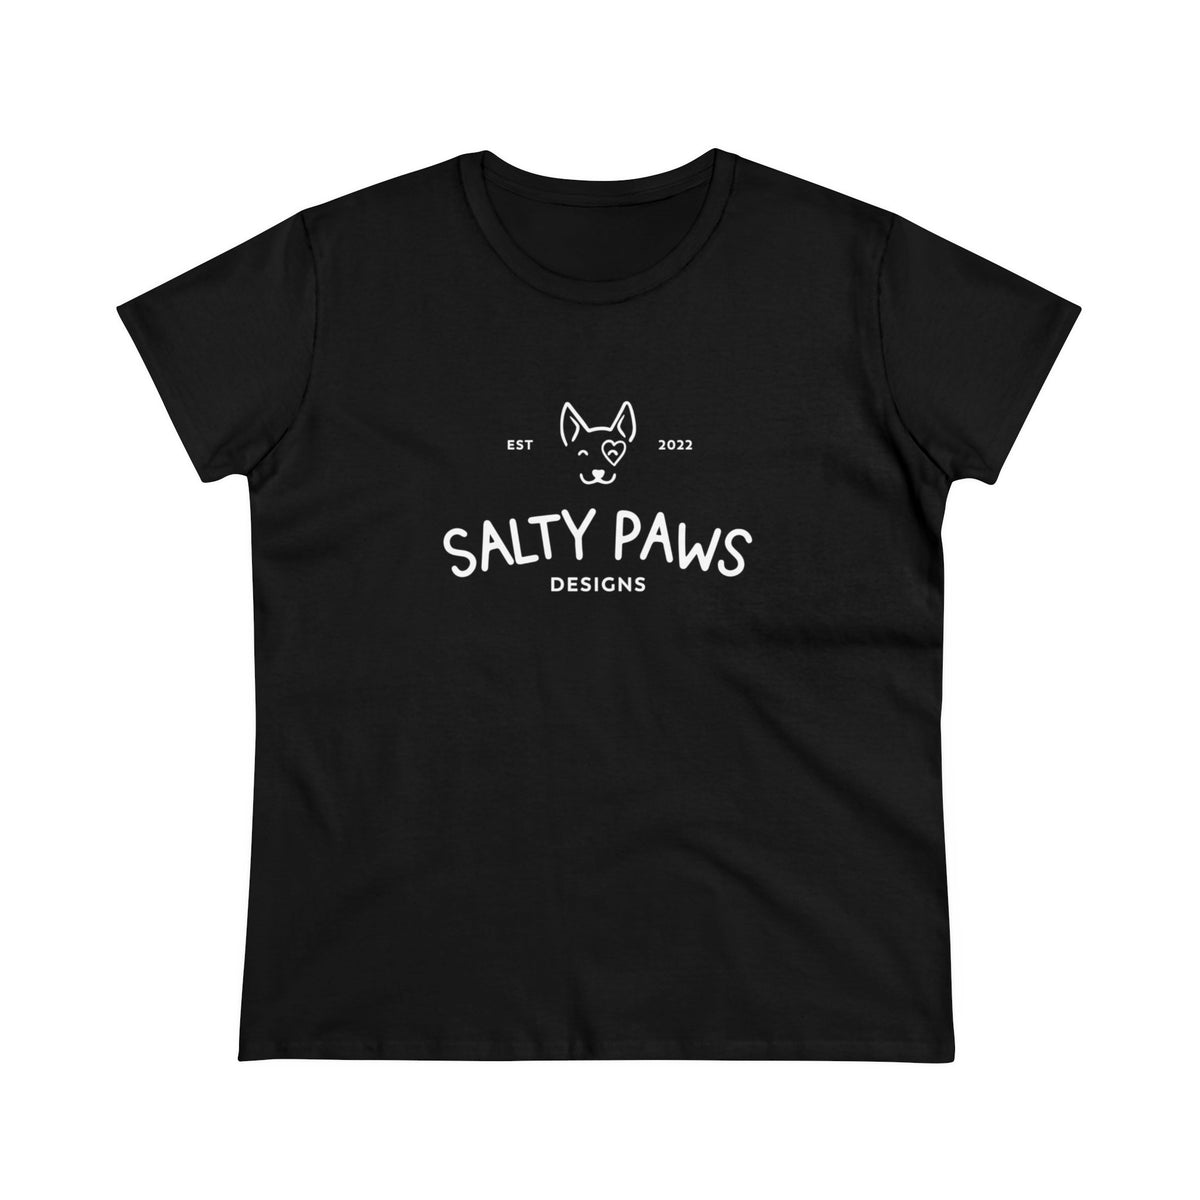 Salty Paws Designs Women's T-Shirt